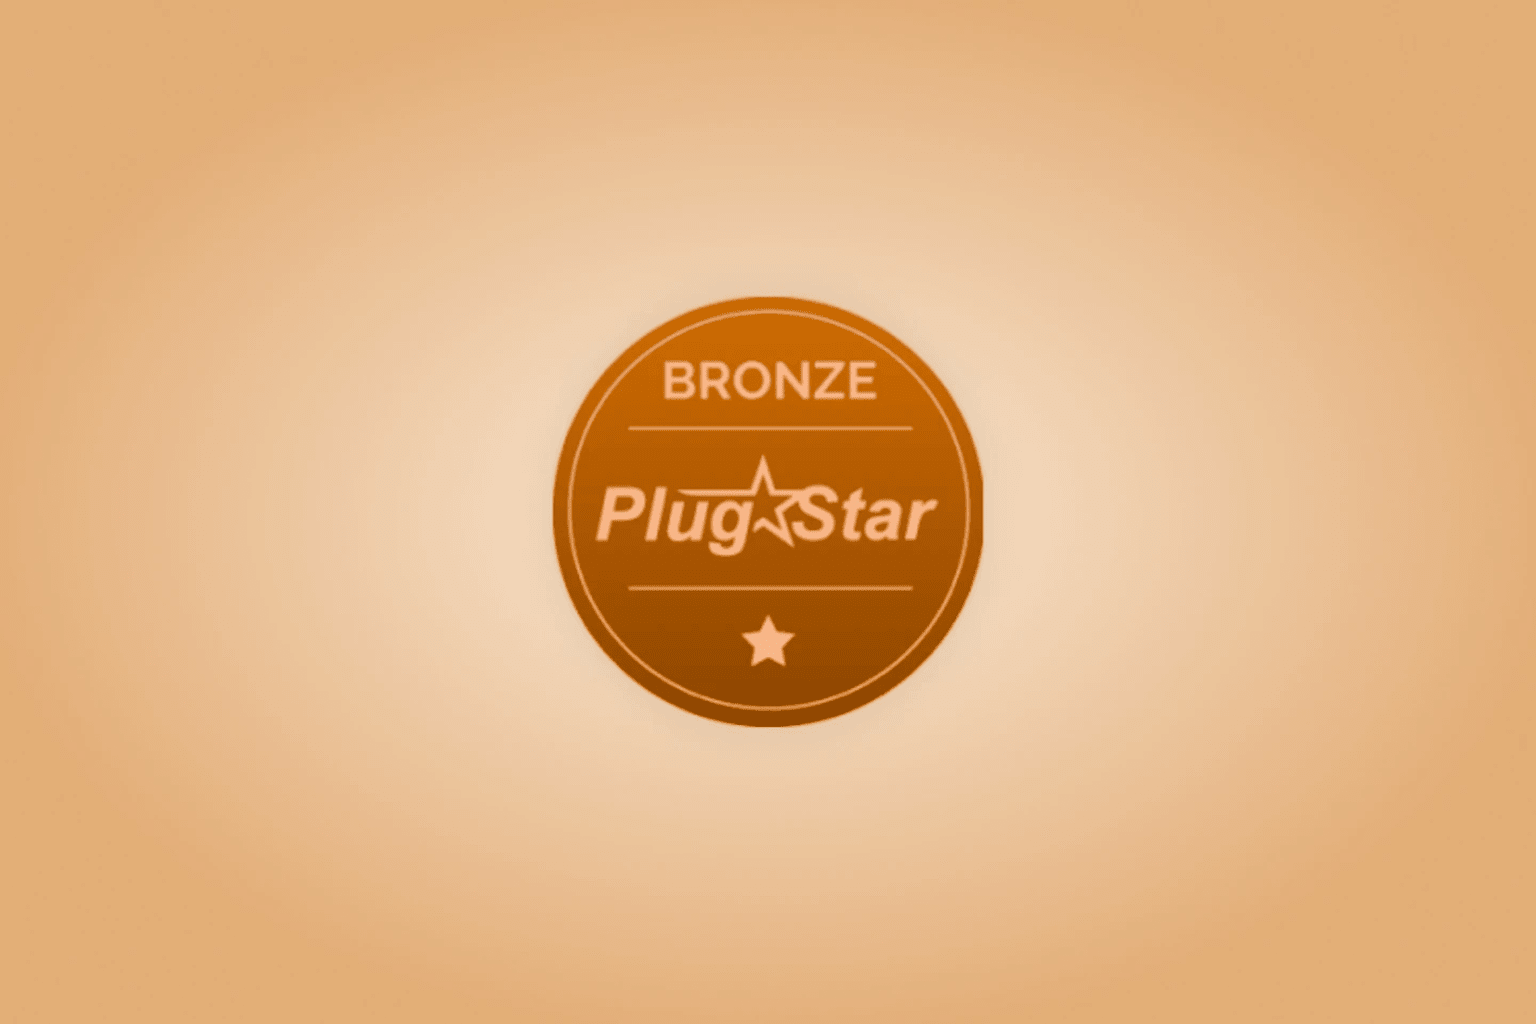 PlugStar Bronze Dealership